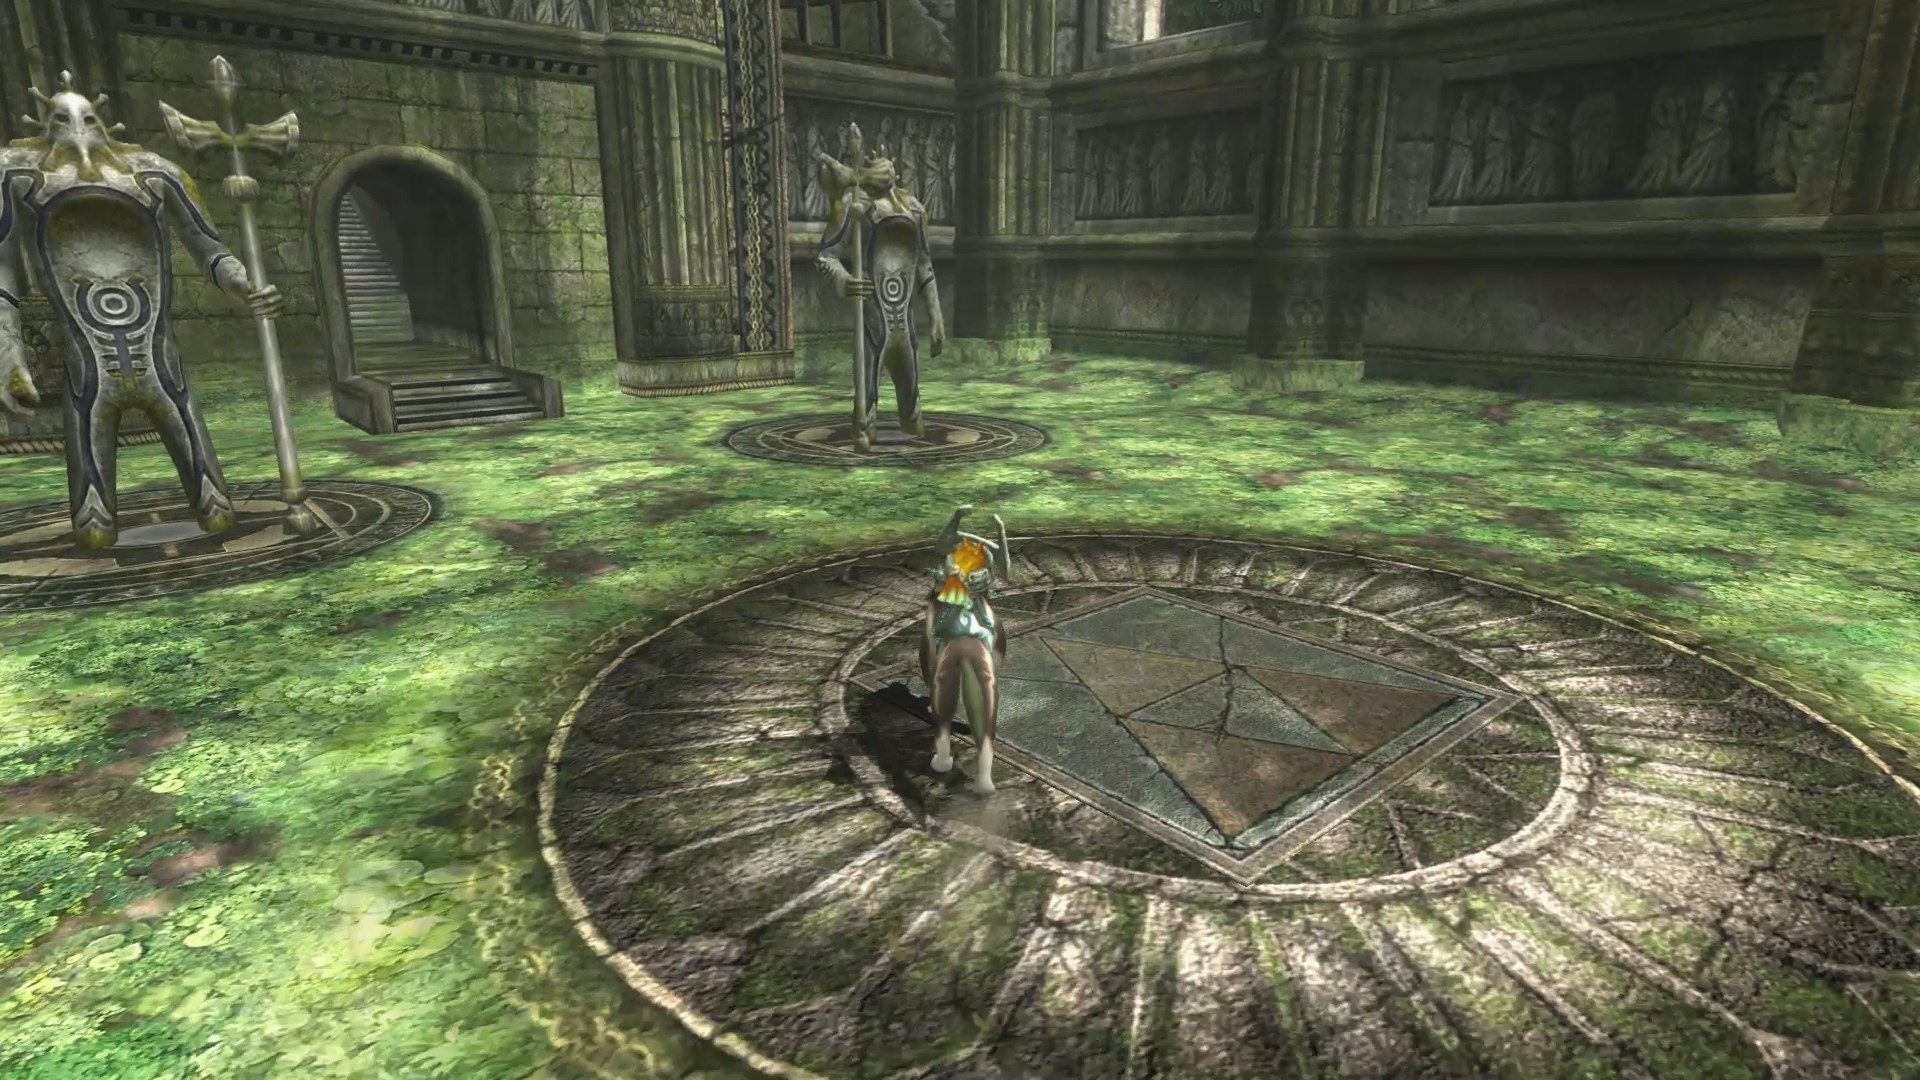 Zelda Twilight Princess Hd 6 Changes To The Game Digital Trends